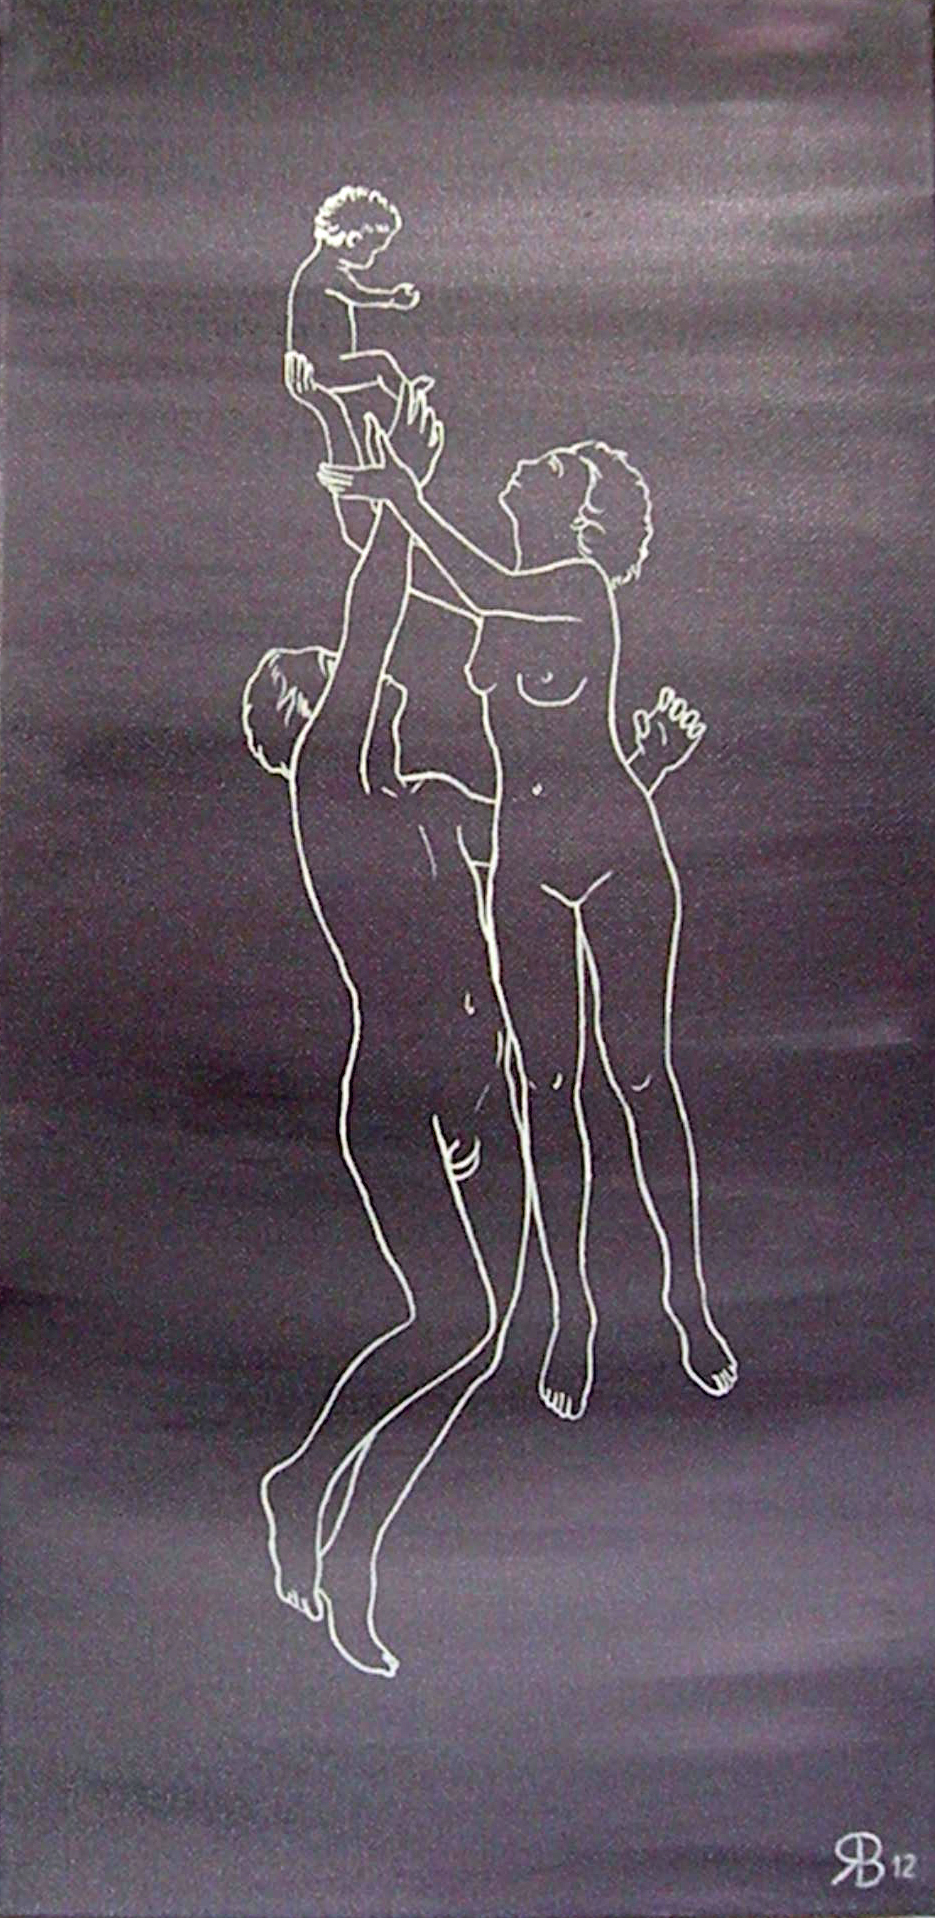 Acryl auf Leinwand;
20 x 40 cm